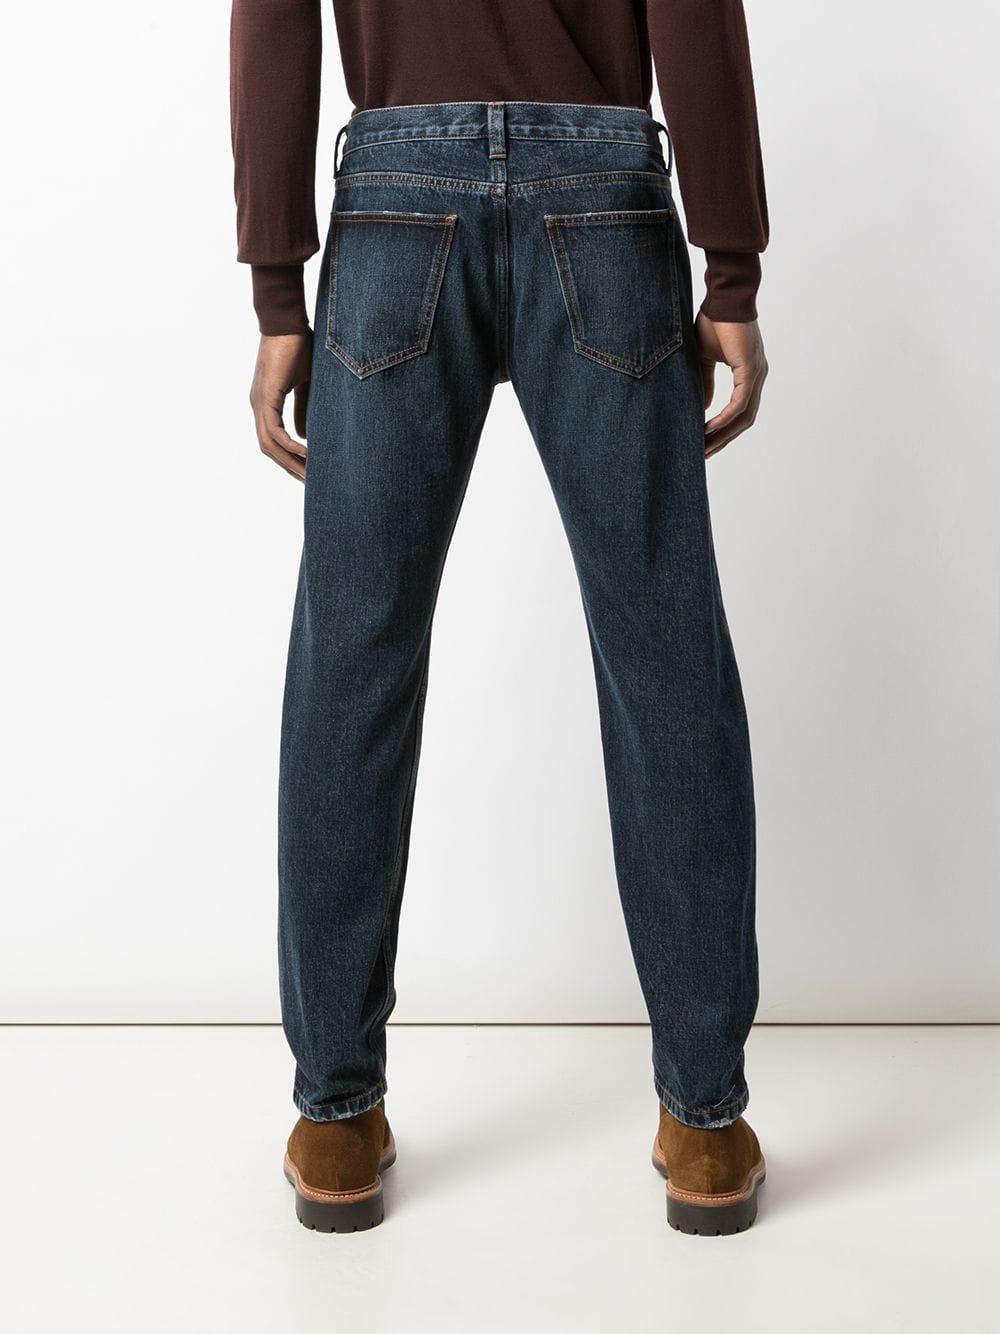 Eleventy Denim Slim-fit Jeans in Blue for Men - Lyst